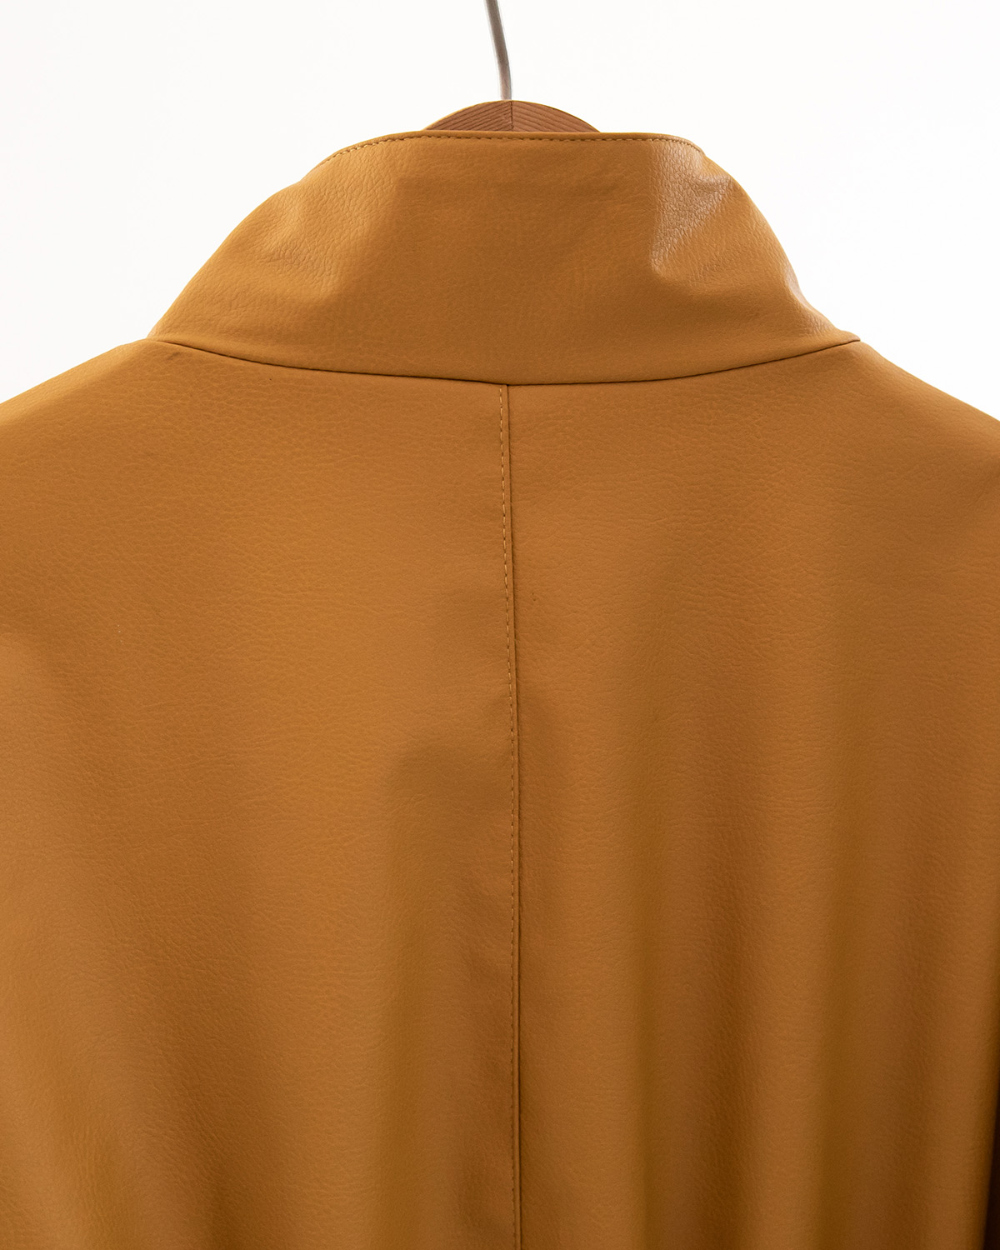 jacket detail image-S1L45